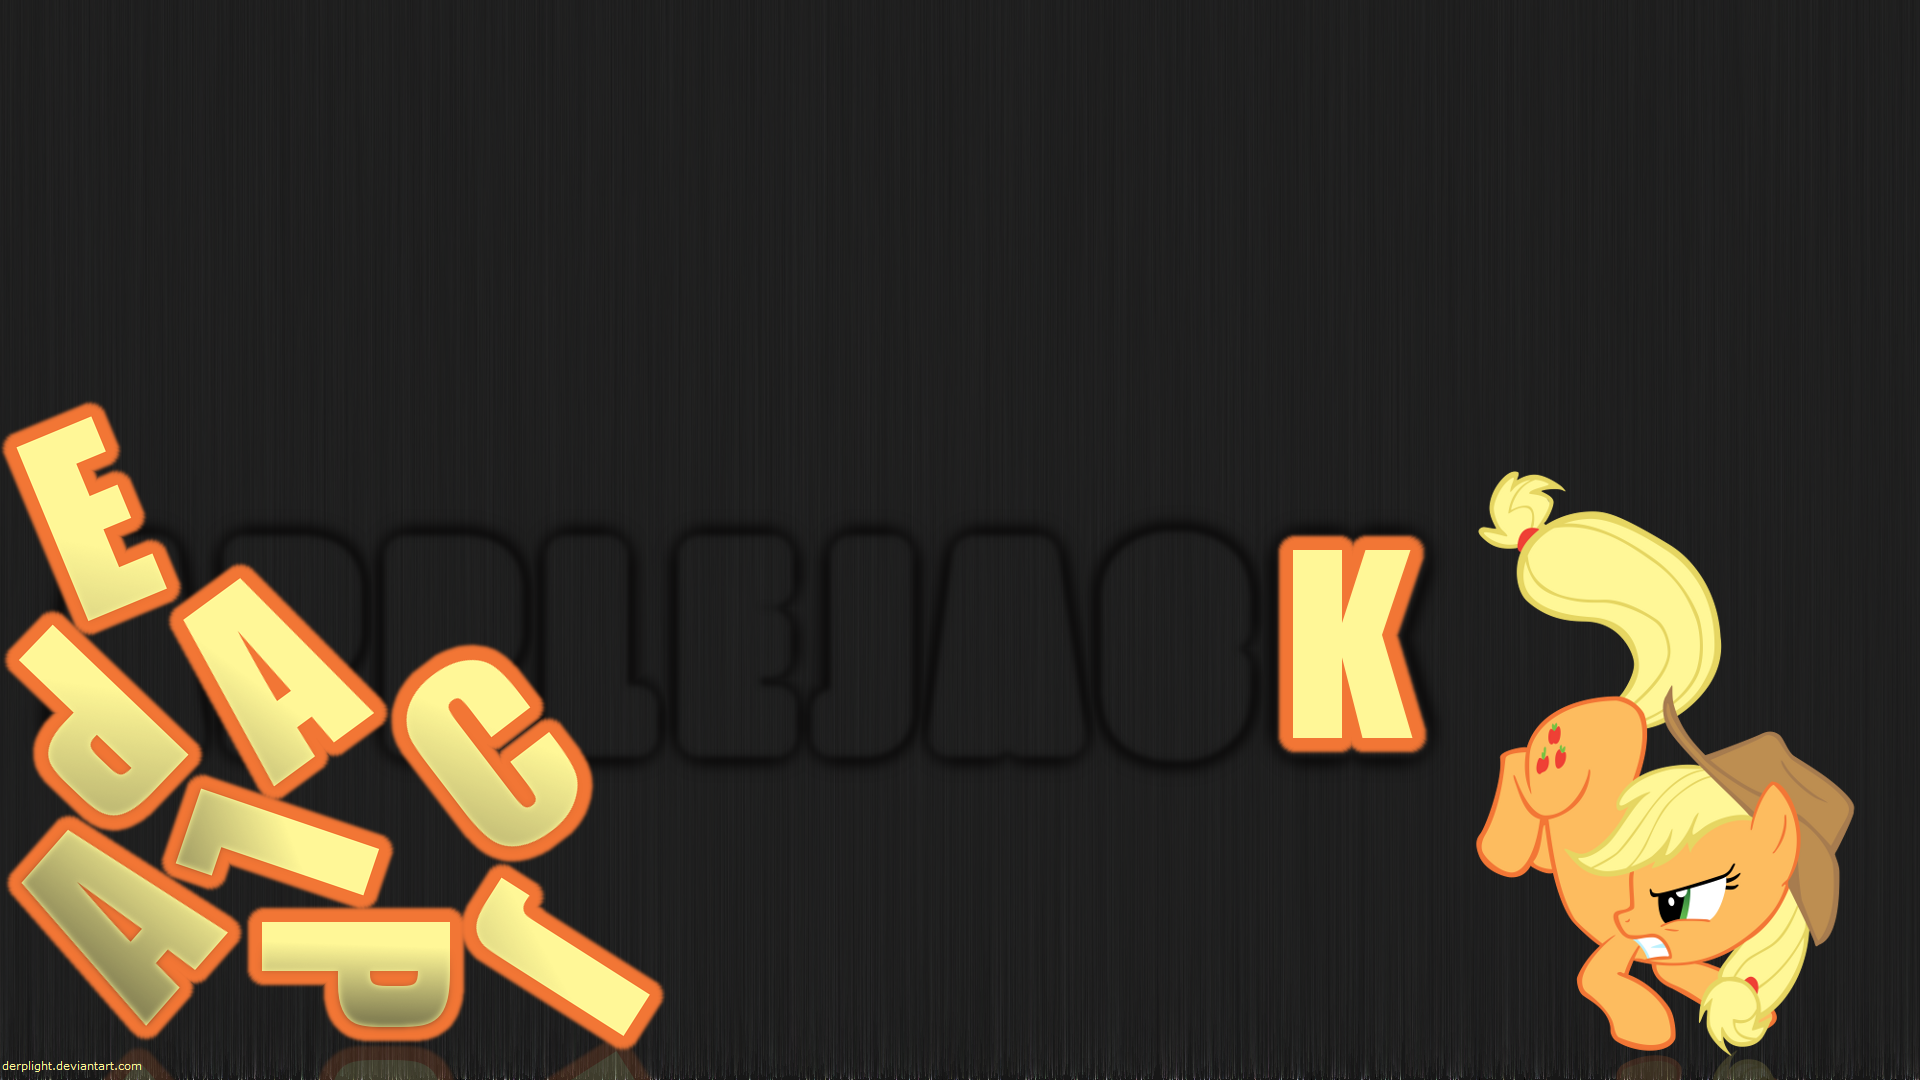 Buckin' Jack by DerpLight and theaceofspadez